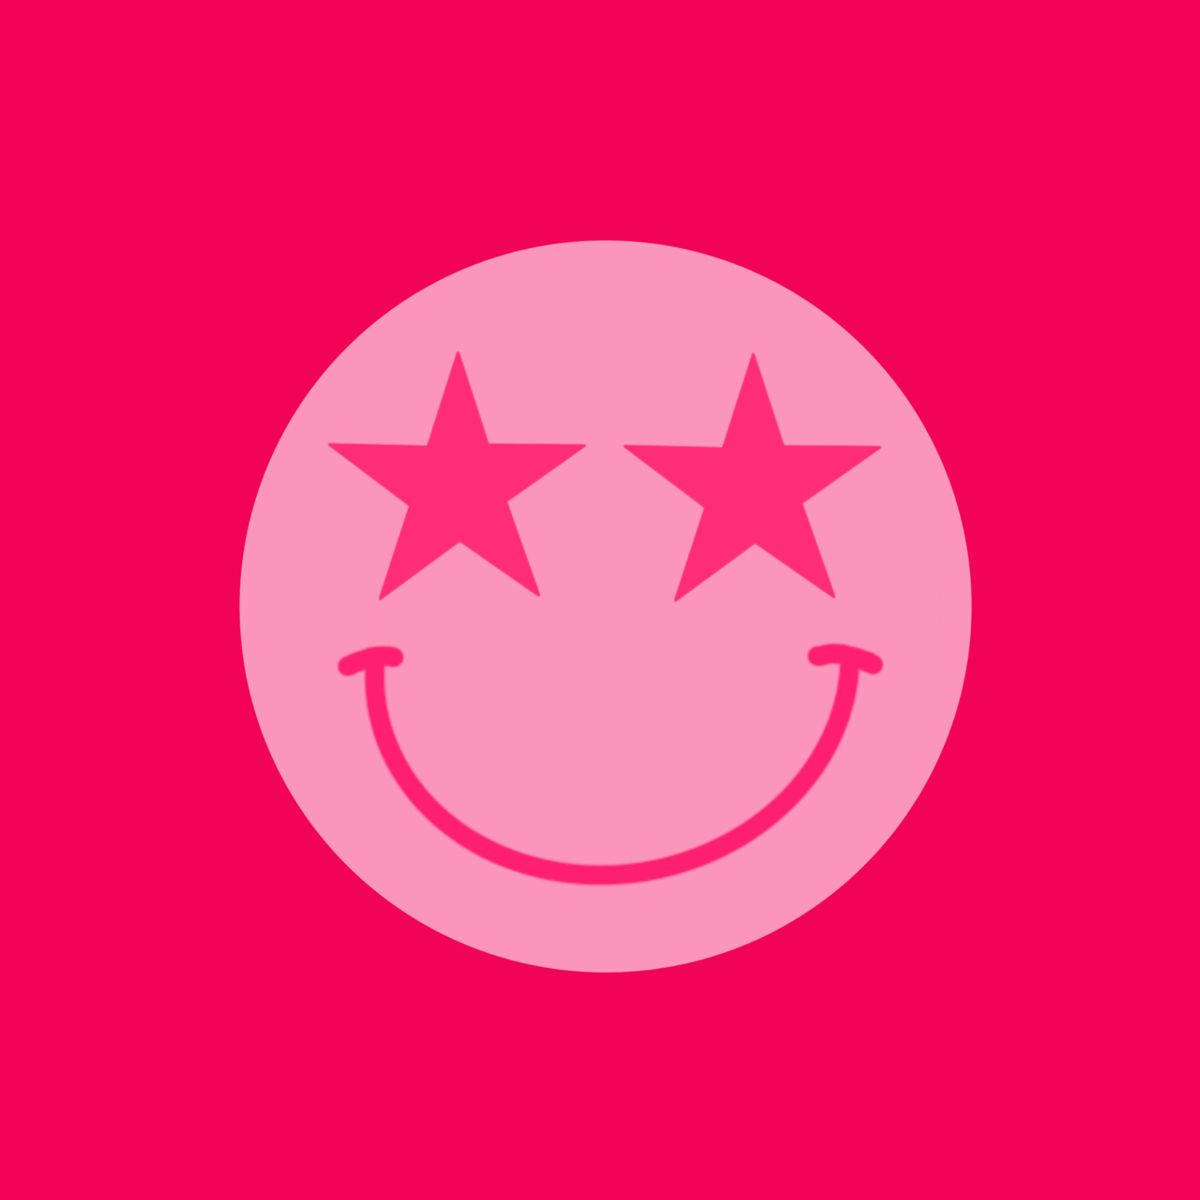 Preppy Smiley Face Pink Star Eyes Wallpaper